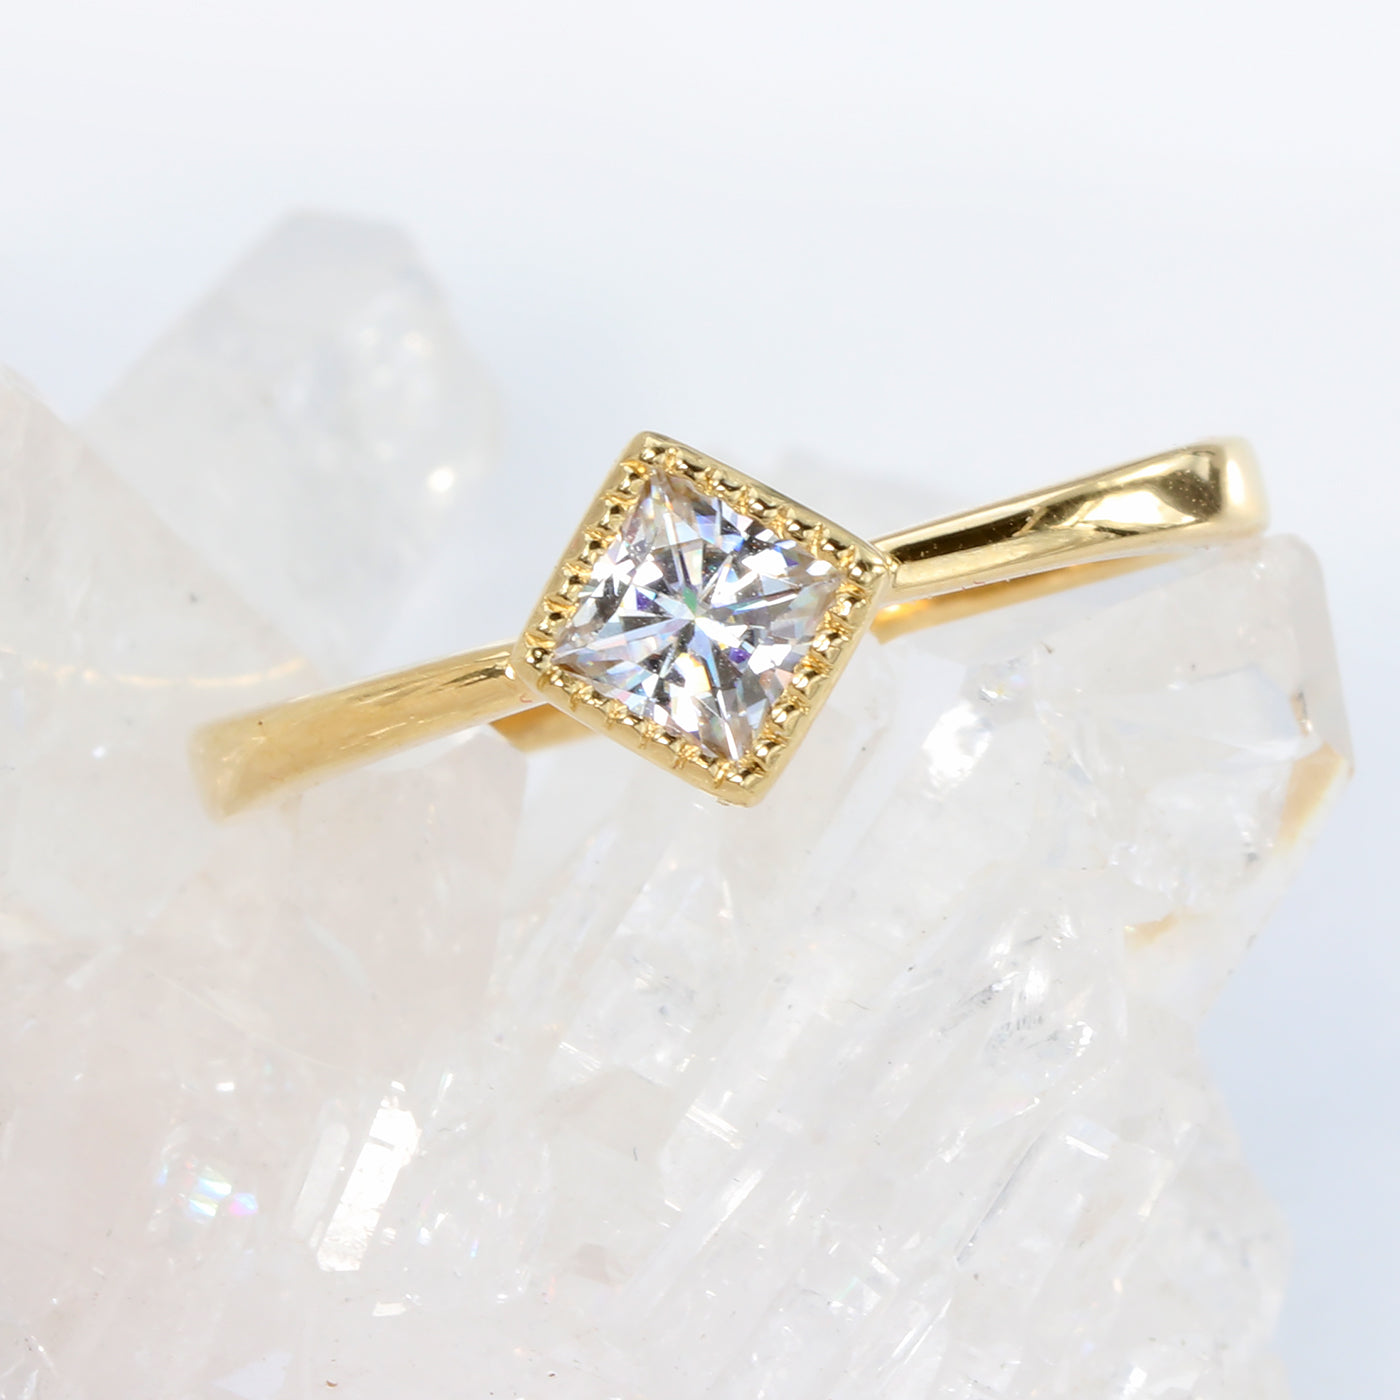 18ct Gold Princess Cut Solitaire Moissanite Engagement Ring (Size M 1/2, Resize J 1/2 - P 1/2)